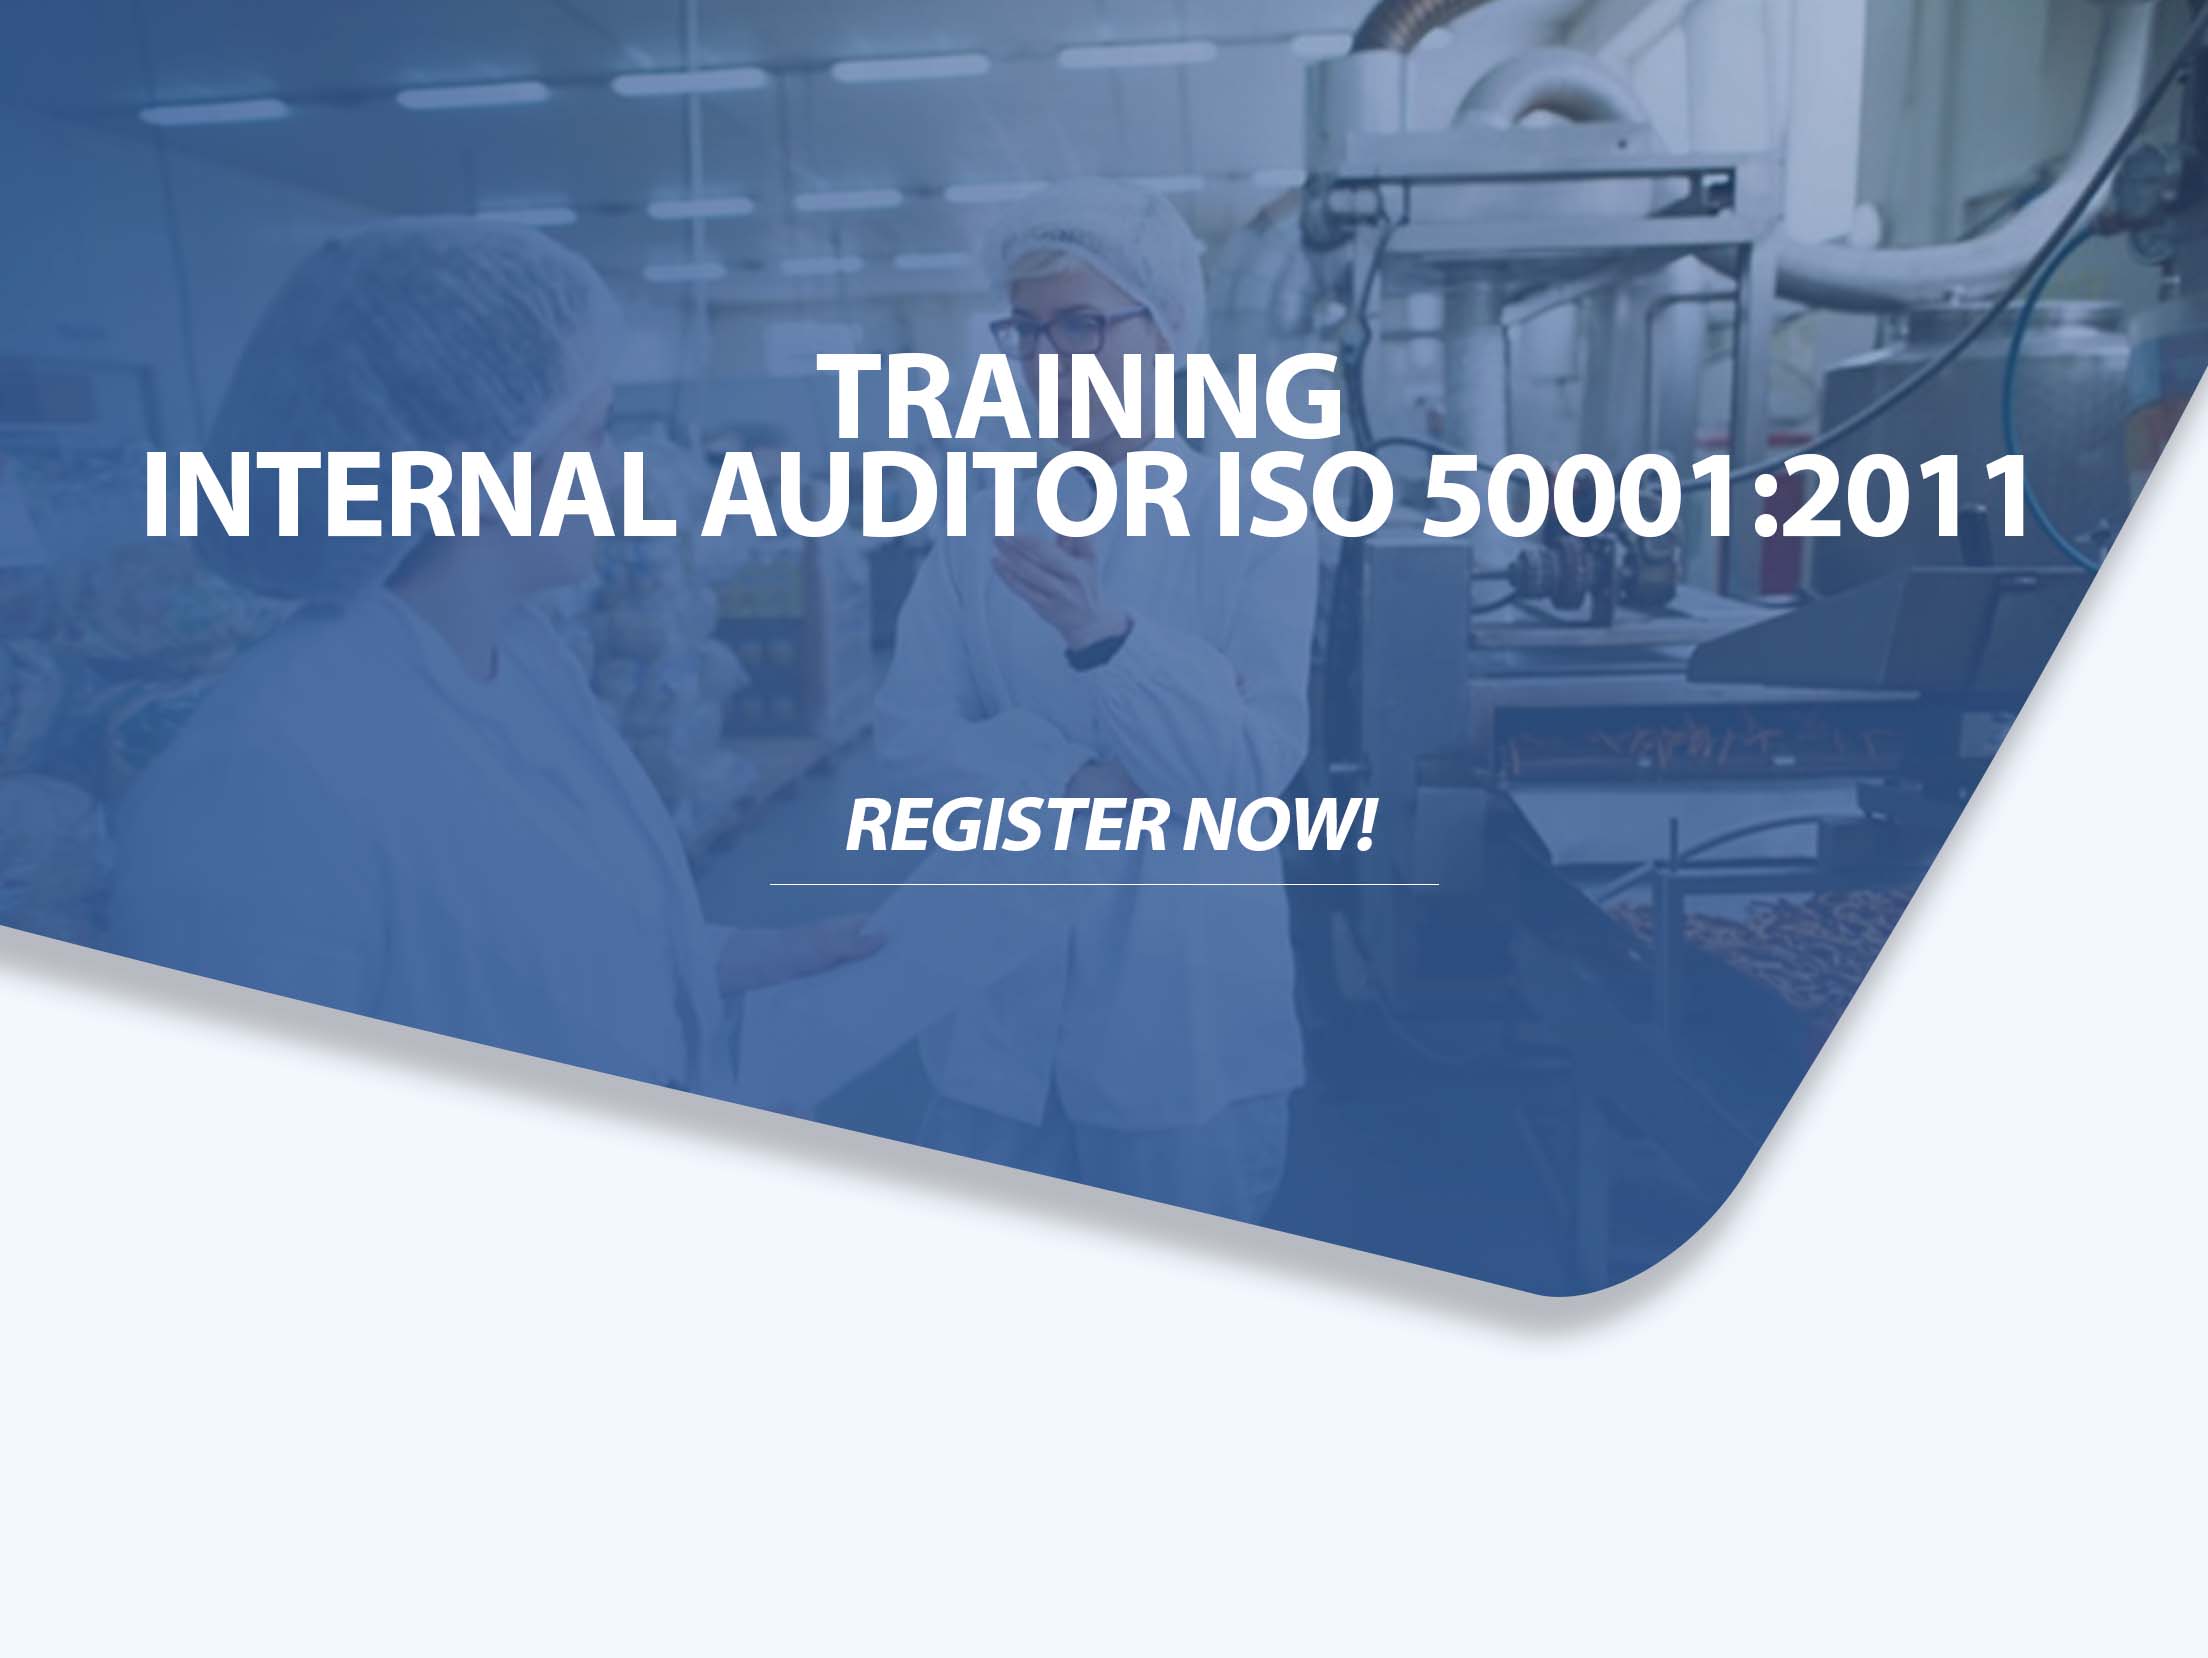 Training Internal Auditor ISO 50001 2011